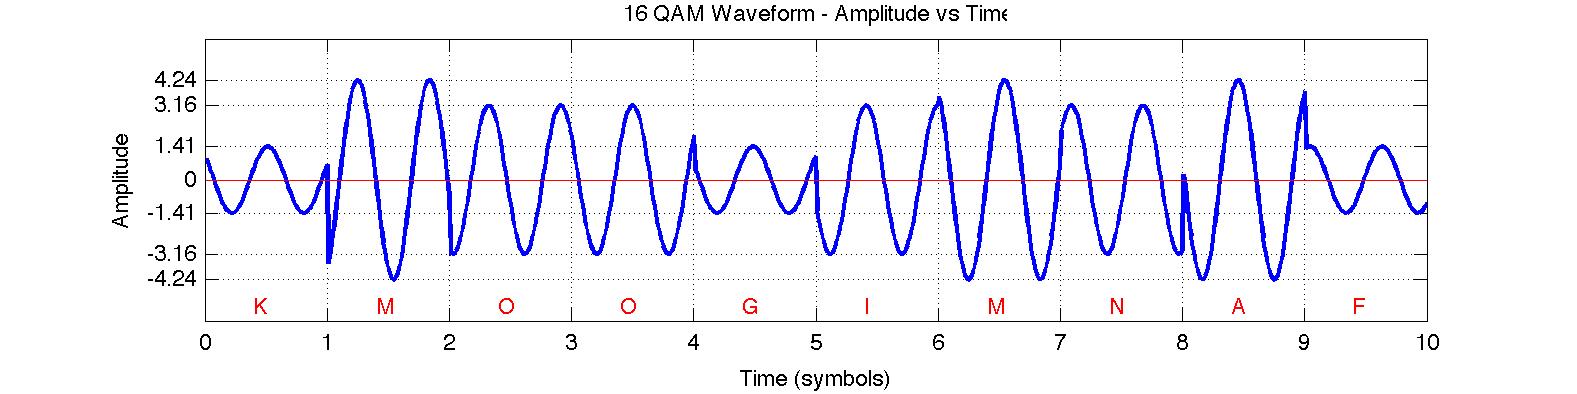 16-QAM Waveform